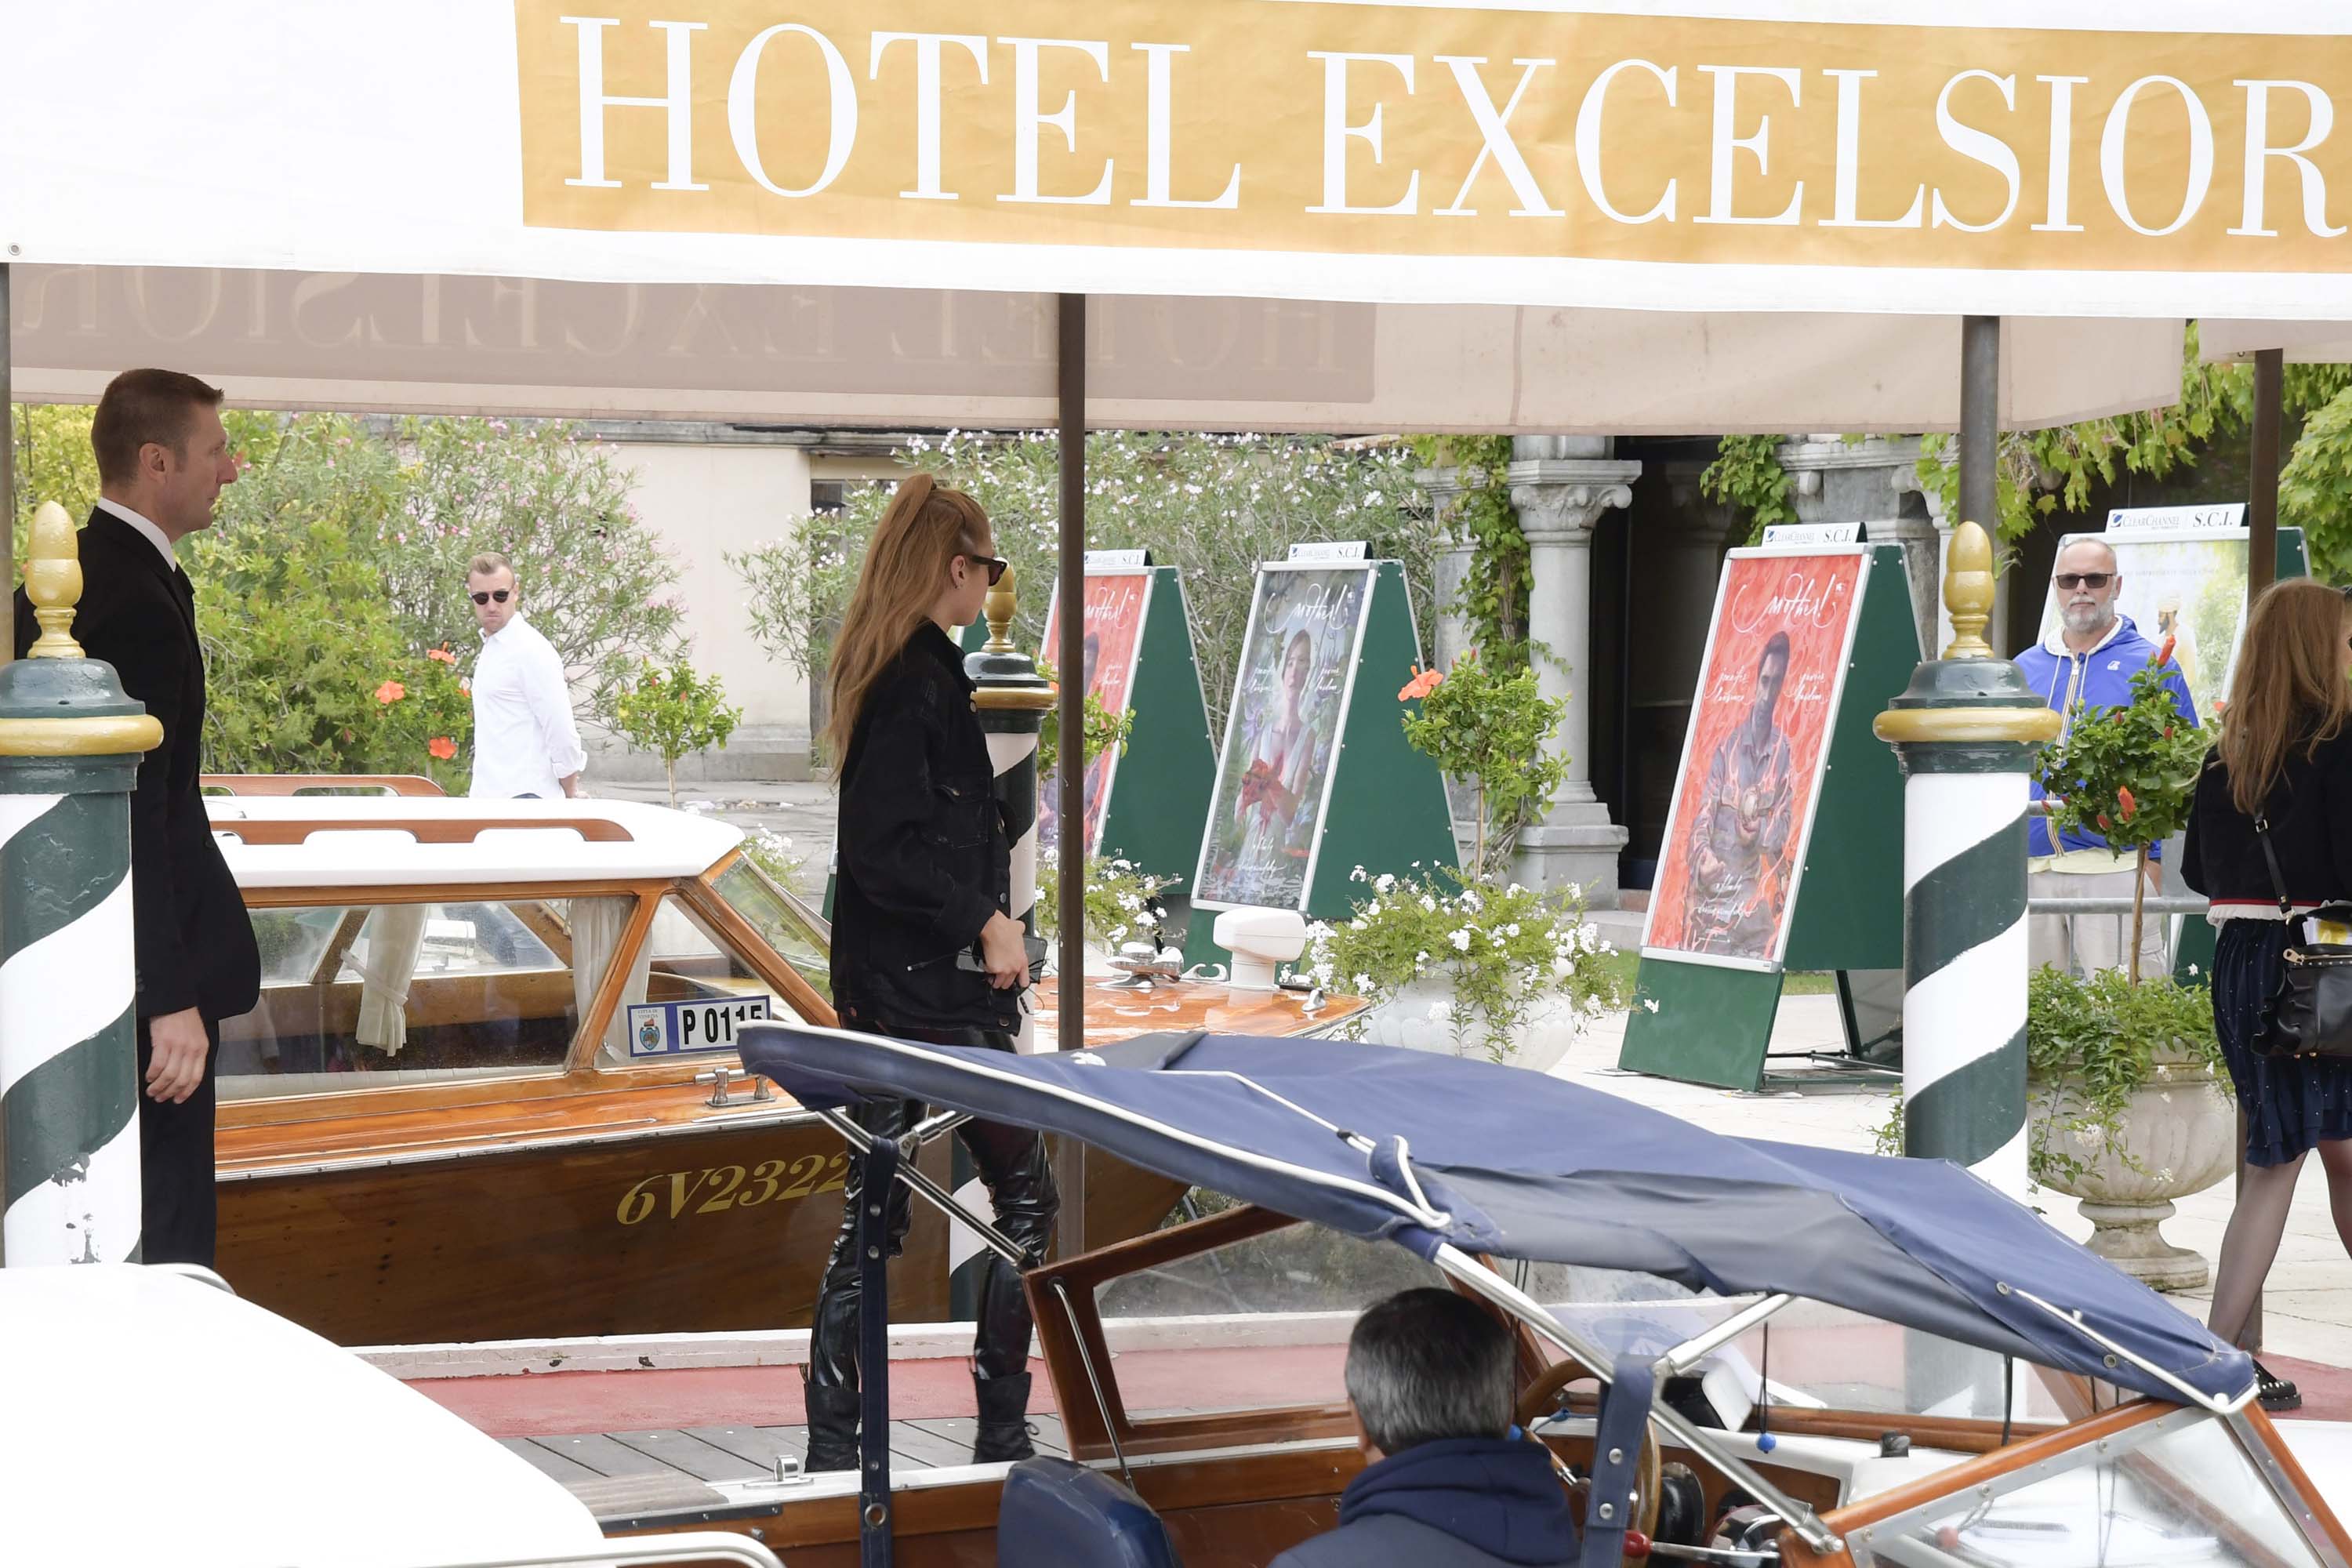 Stella Maxwell arrives in Venice Lido